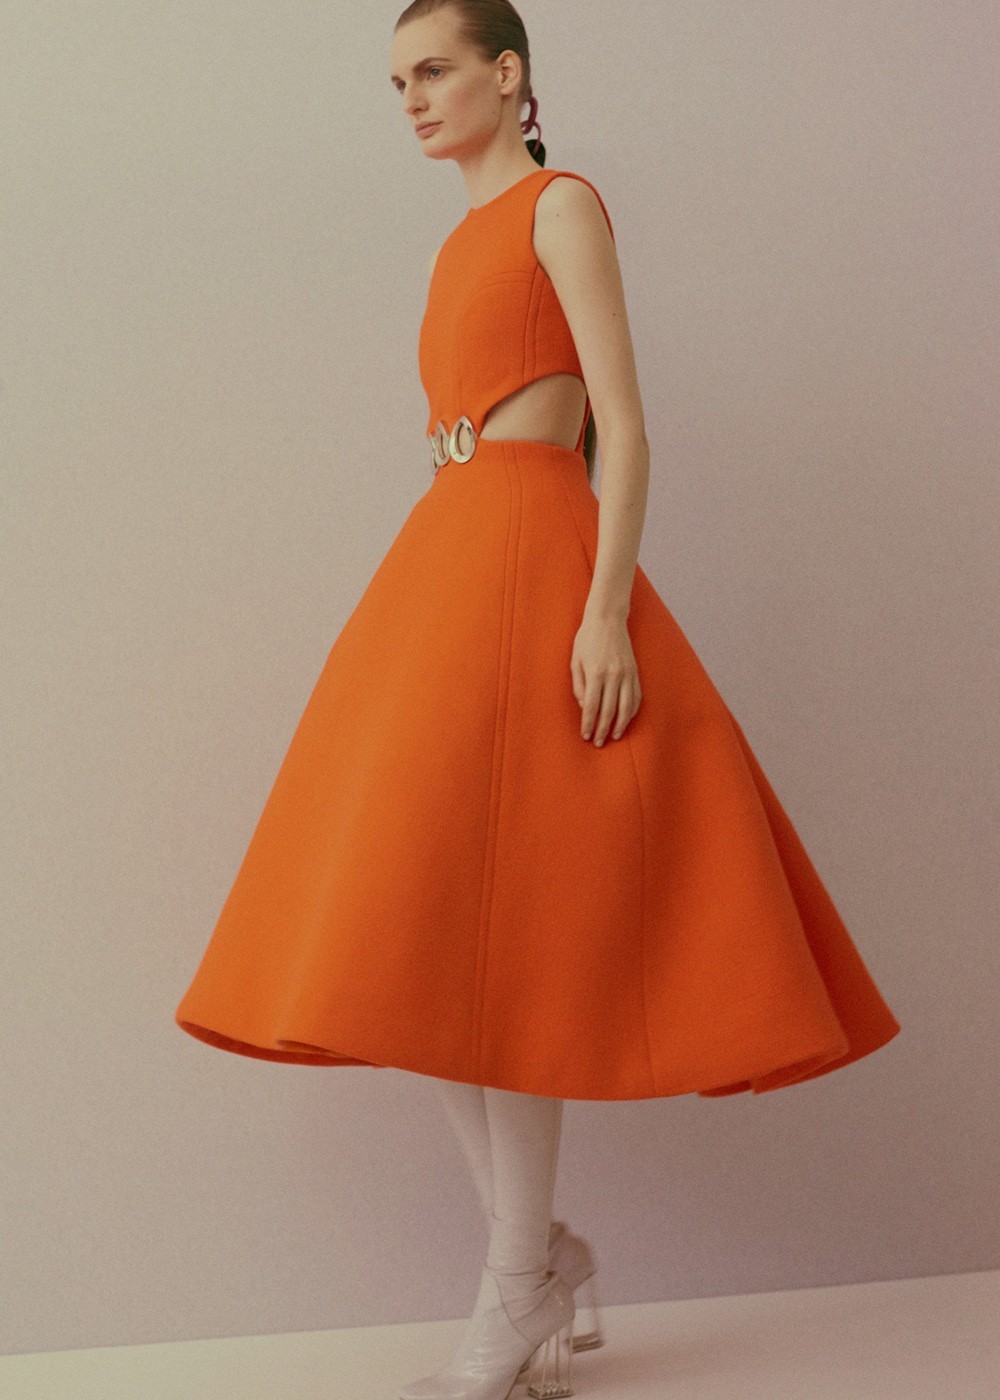 Blair Waldorf orange dress by Christian Dior  Vestido festa curto  Vestidos Looks